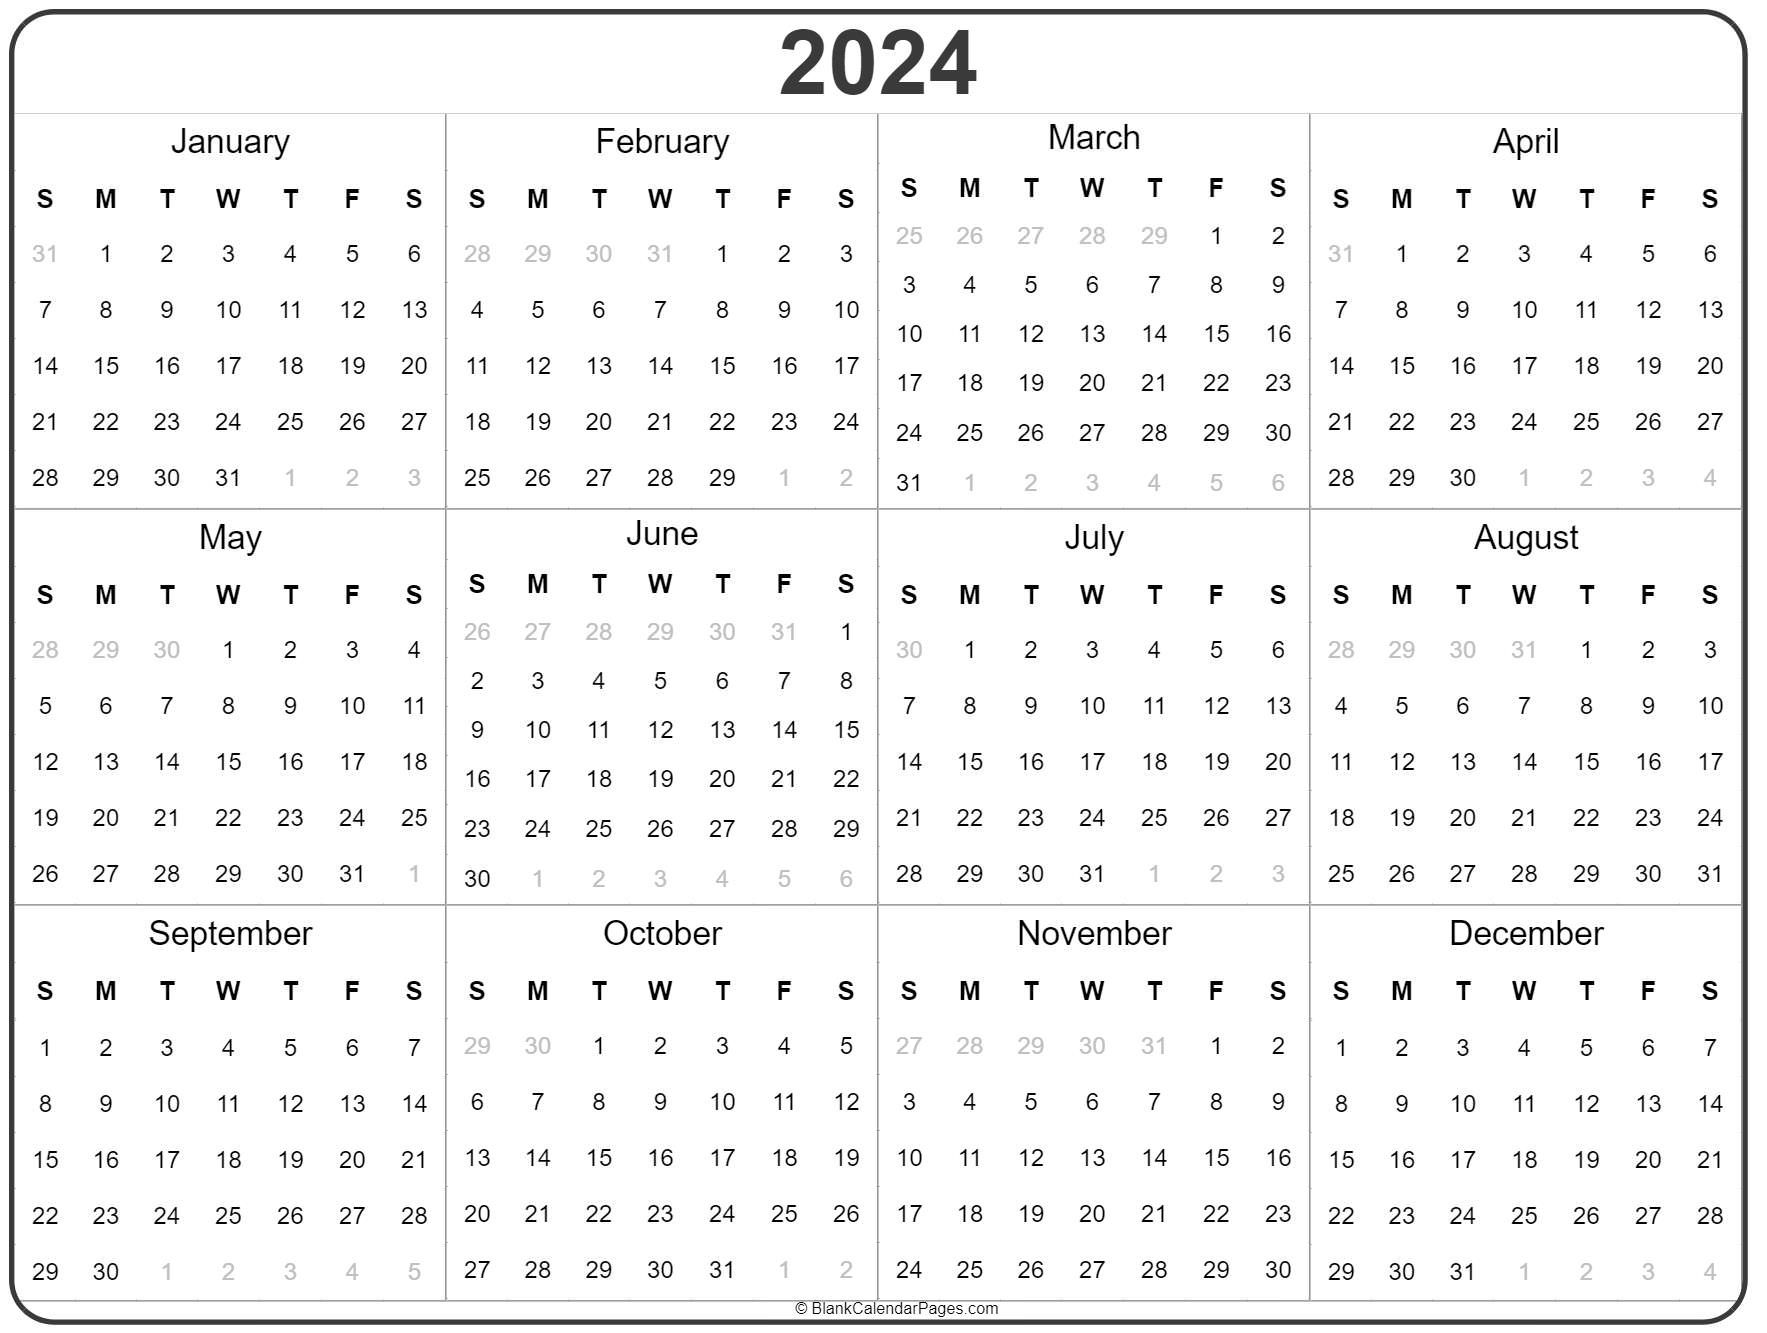 2024 Year Calendar | Yearly Printable | 2024 Yearly Calendar Image